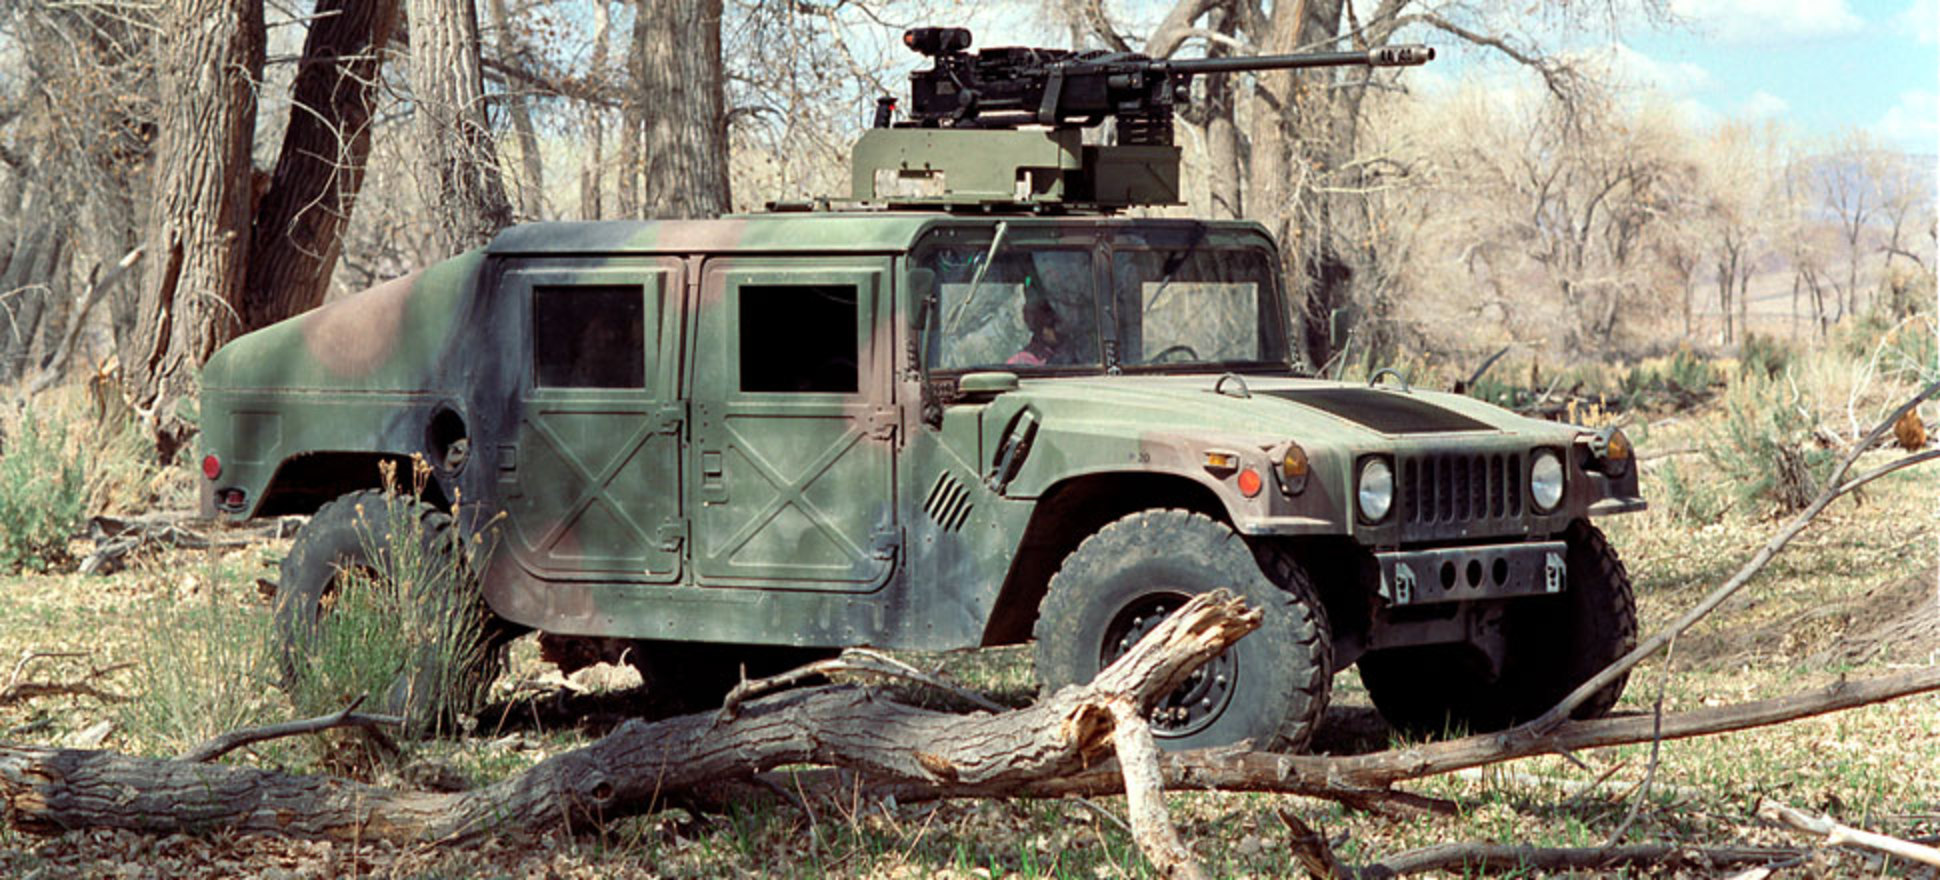 Am General Hummer M1097a2